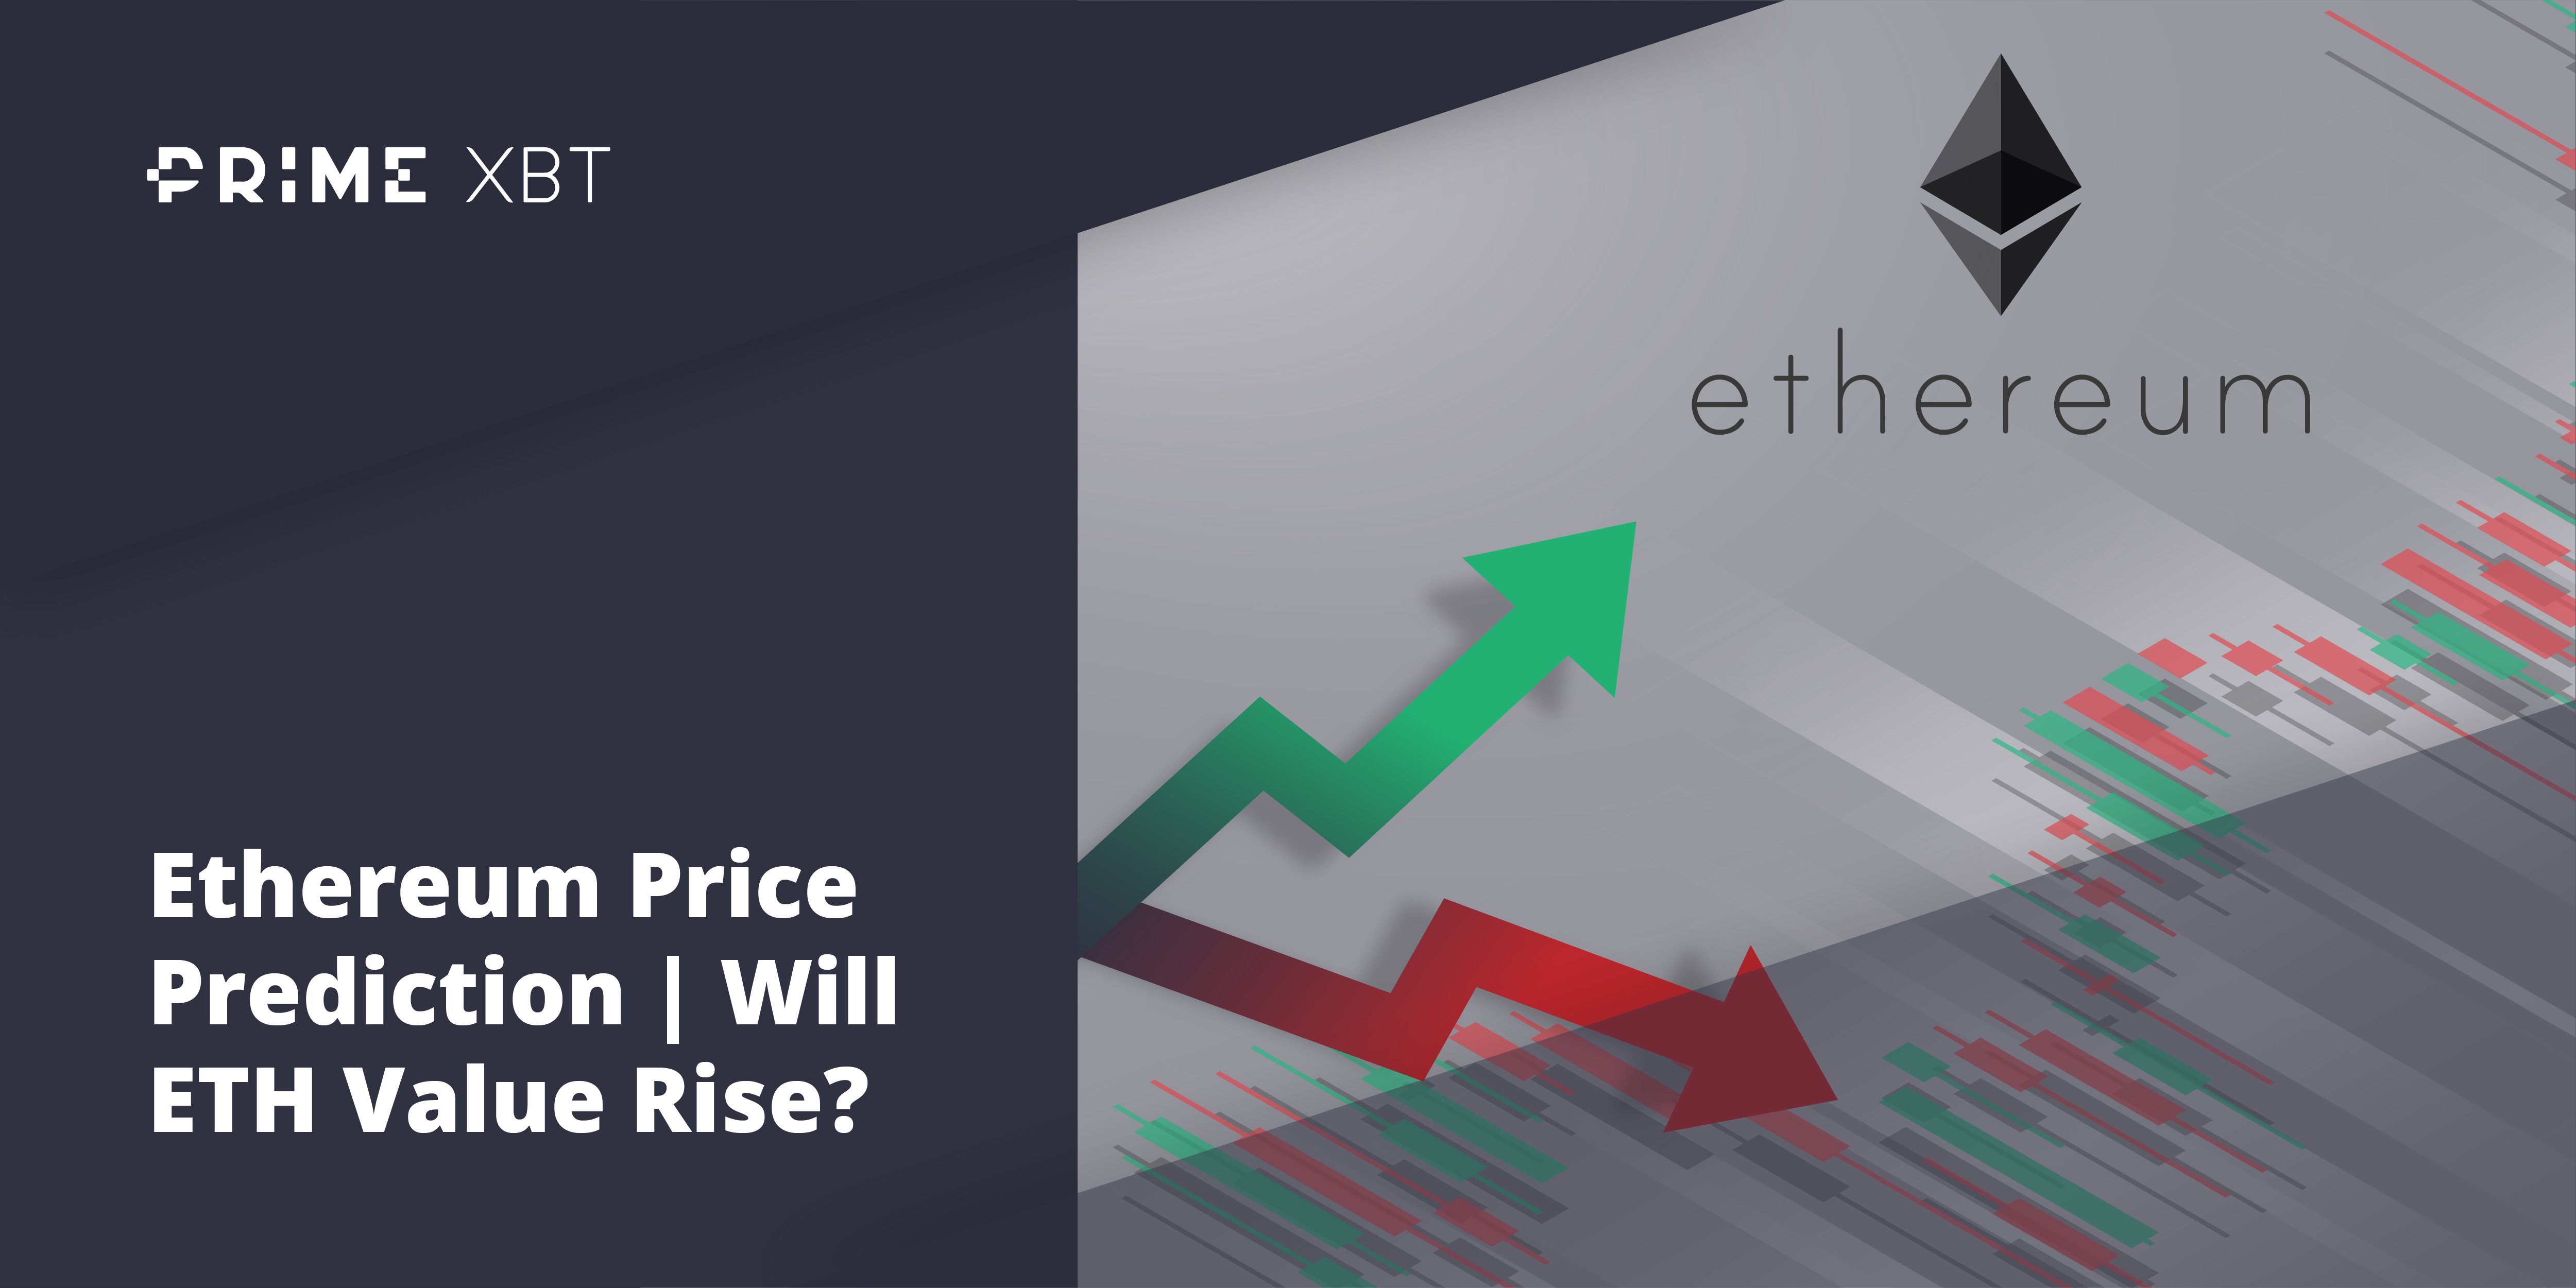 Ethereum (ETH) Price Prediction 2022, 2023, 2025-2030 | PrimeXBT